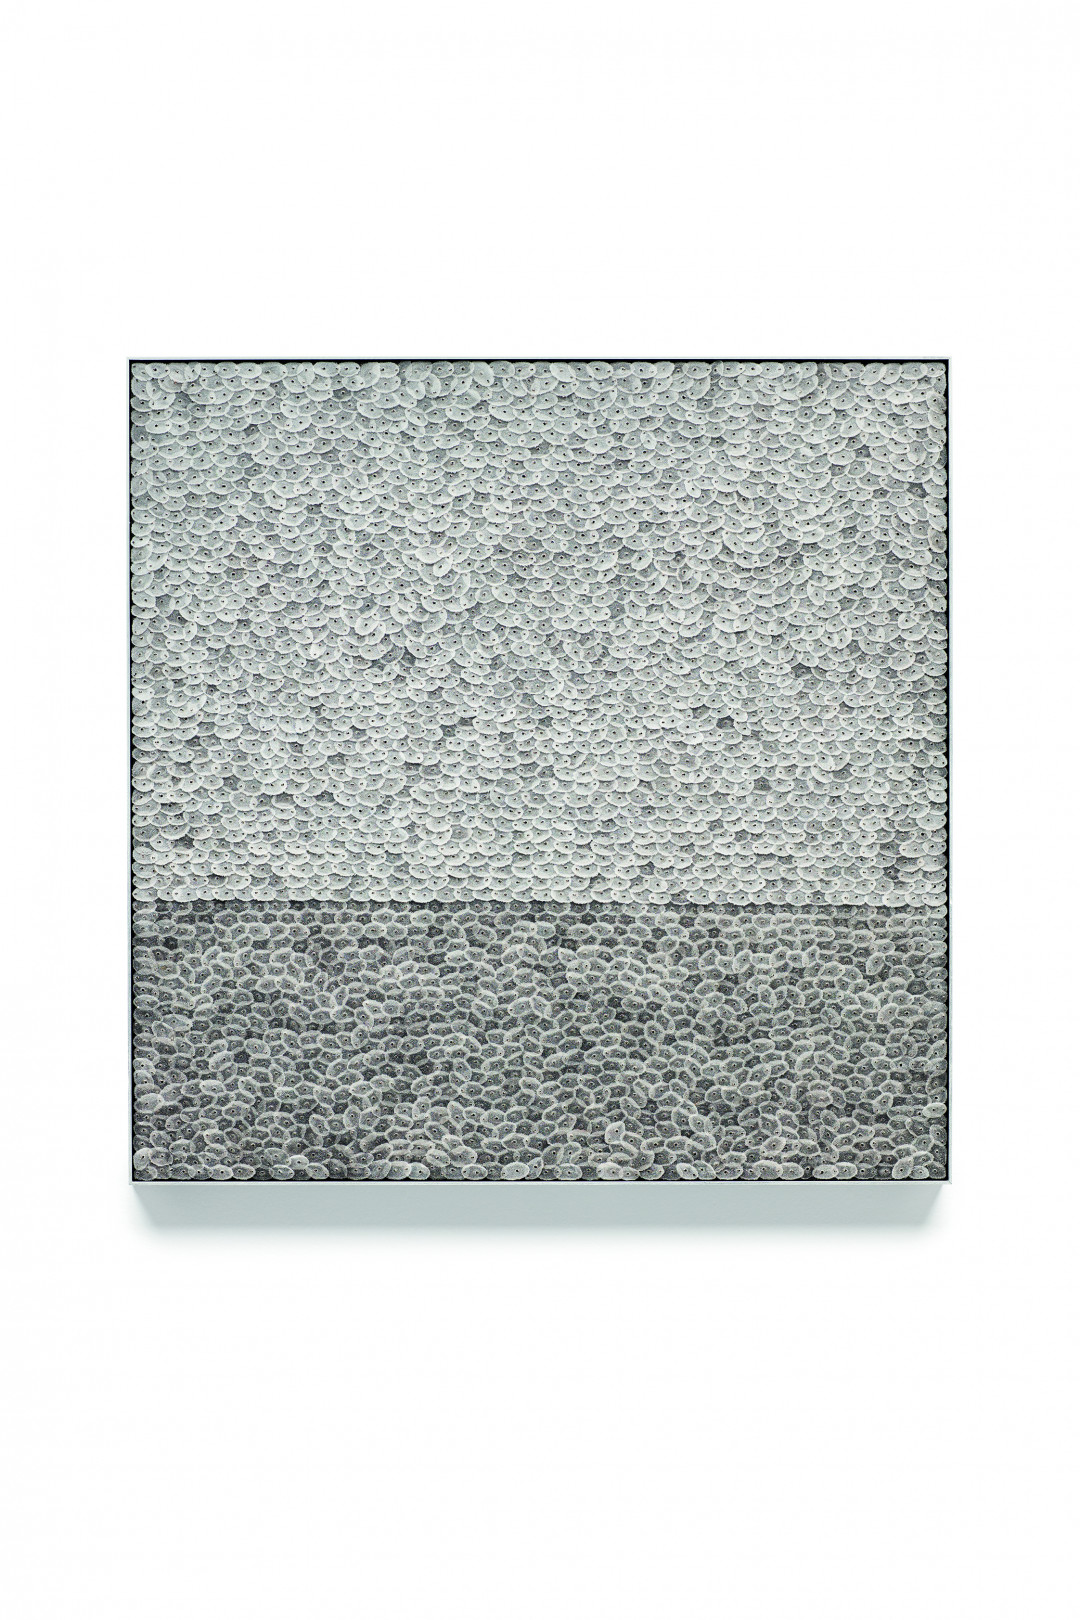 Sylvie Vandenhoucke, Bélgica ‘Converging line’, cristal - ‘pâte de verre’, 93 x 93 x 6 cm. 2014